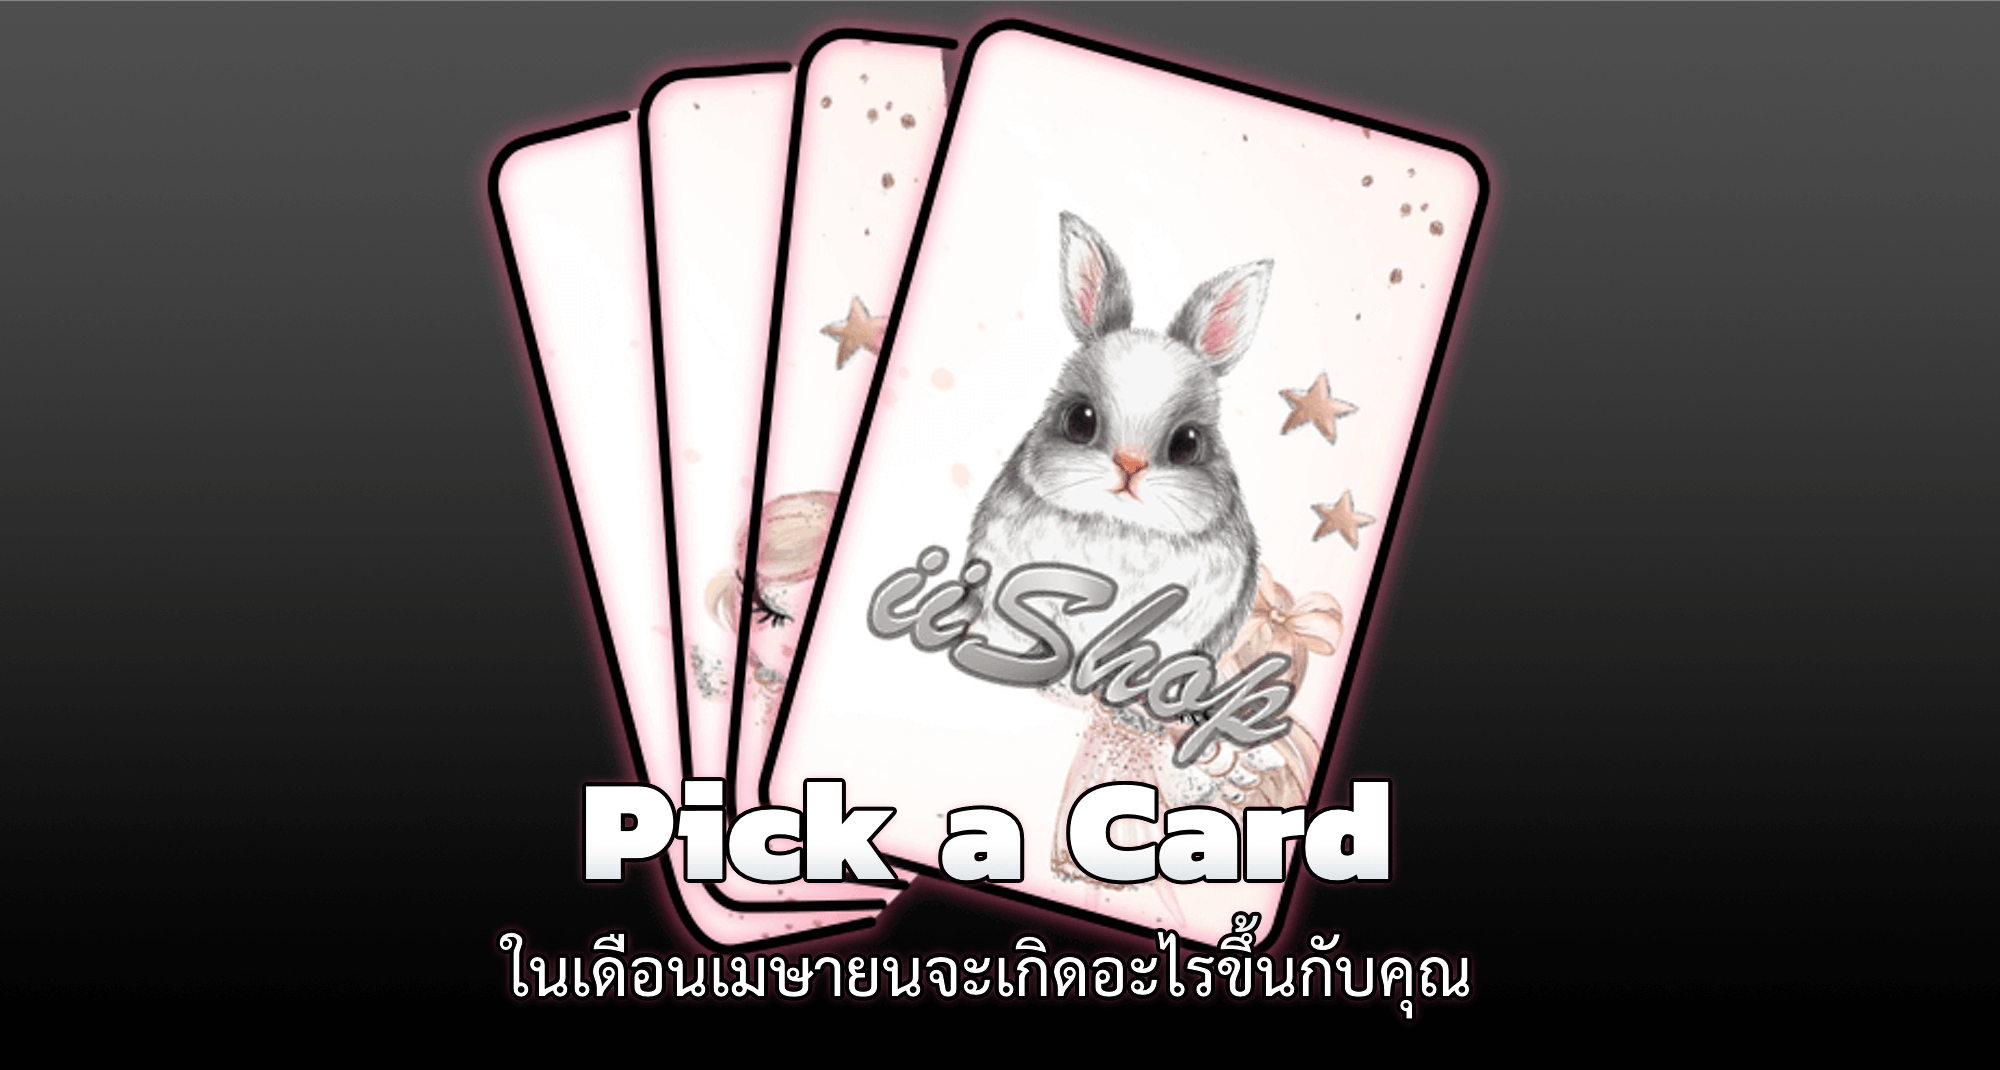 Pick a Card ในเดือนเมษายน 2563 จะเกิดอะไรขึ้นกับคุณ